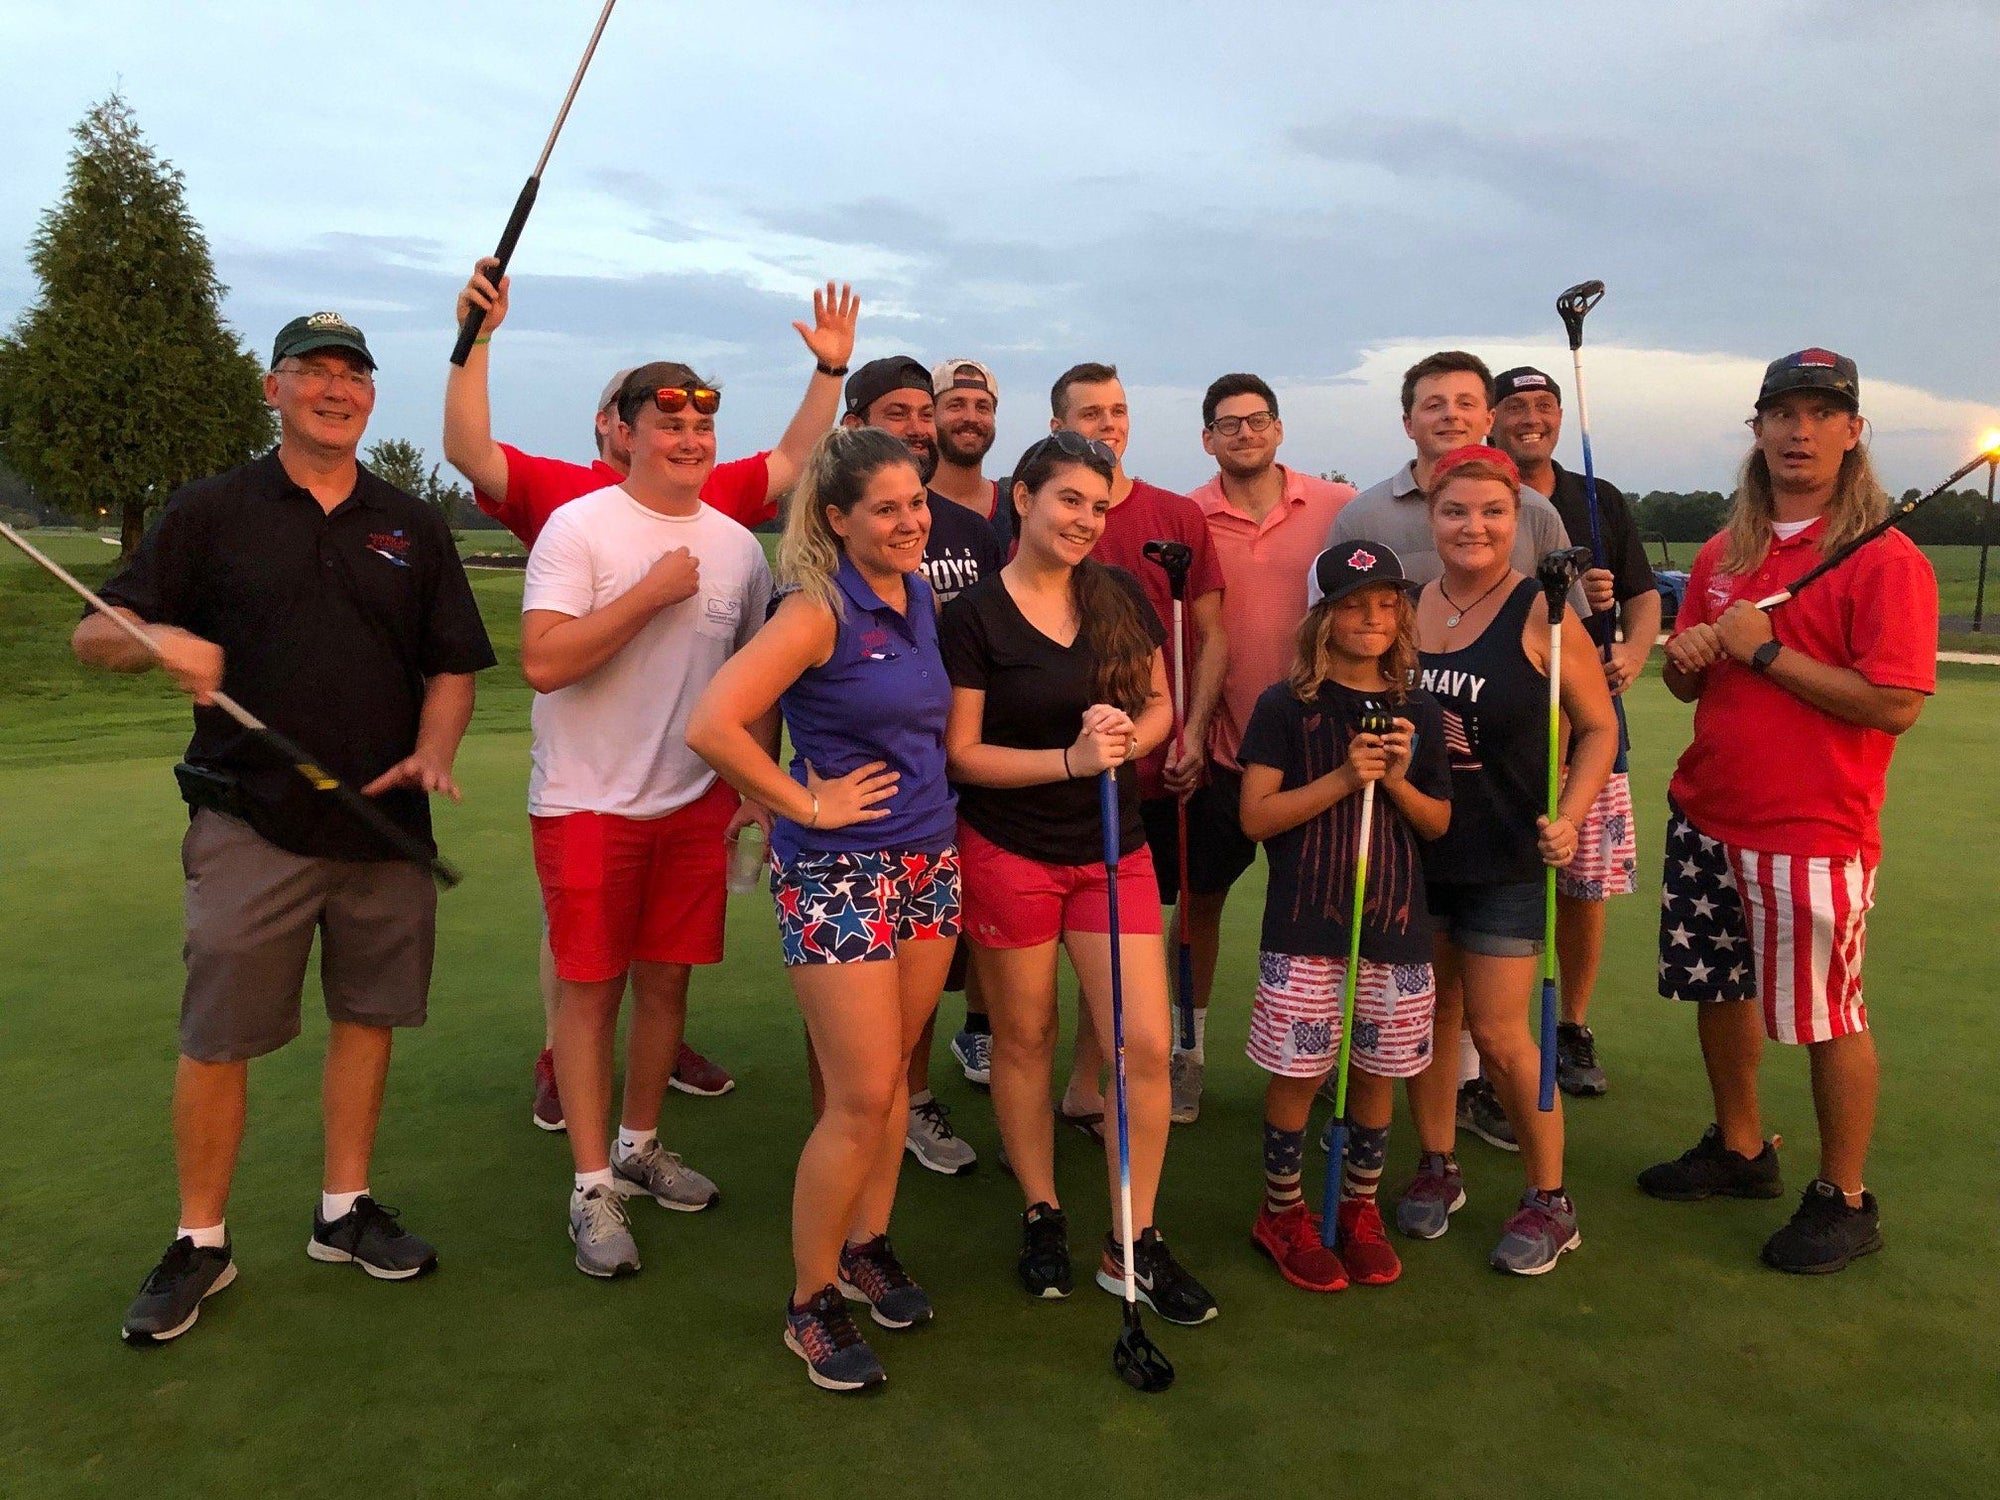 American Classic Golf Club and the Summer FlingGolf League